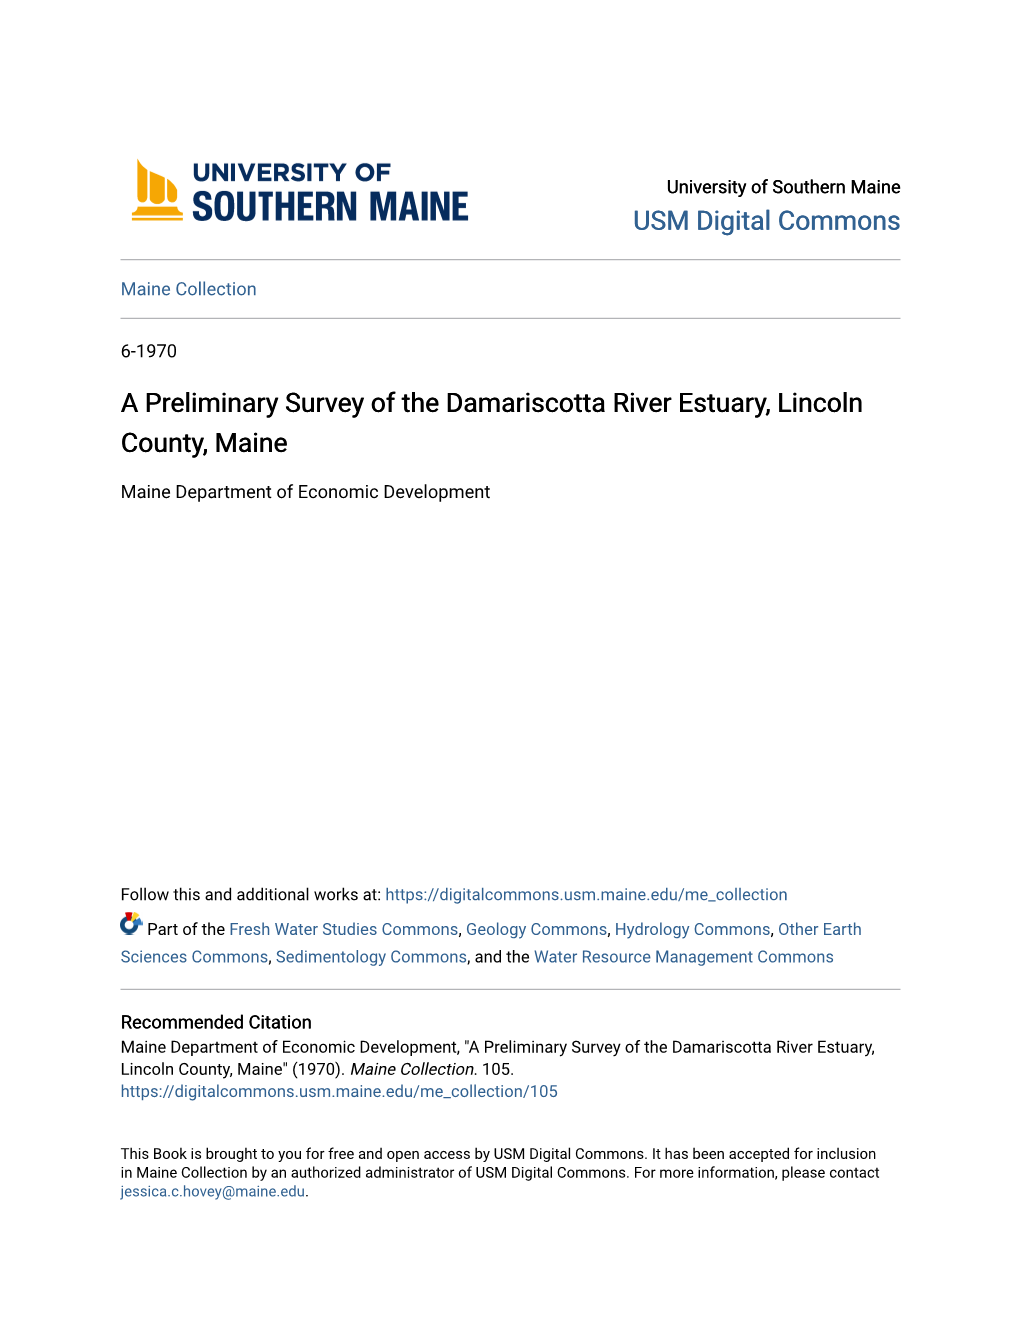 A Preliminary Survey of the Damariscotta River Estuary, Lincoln County, Maine